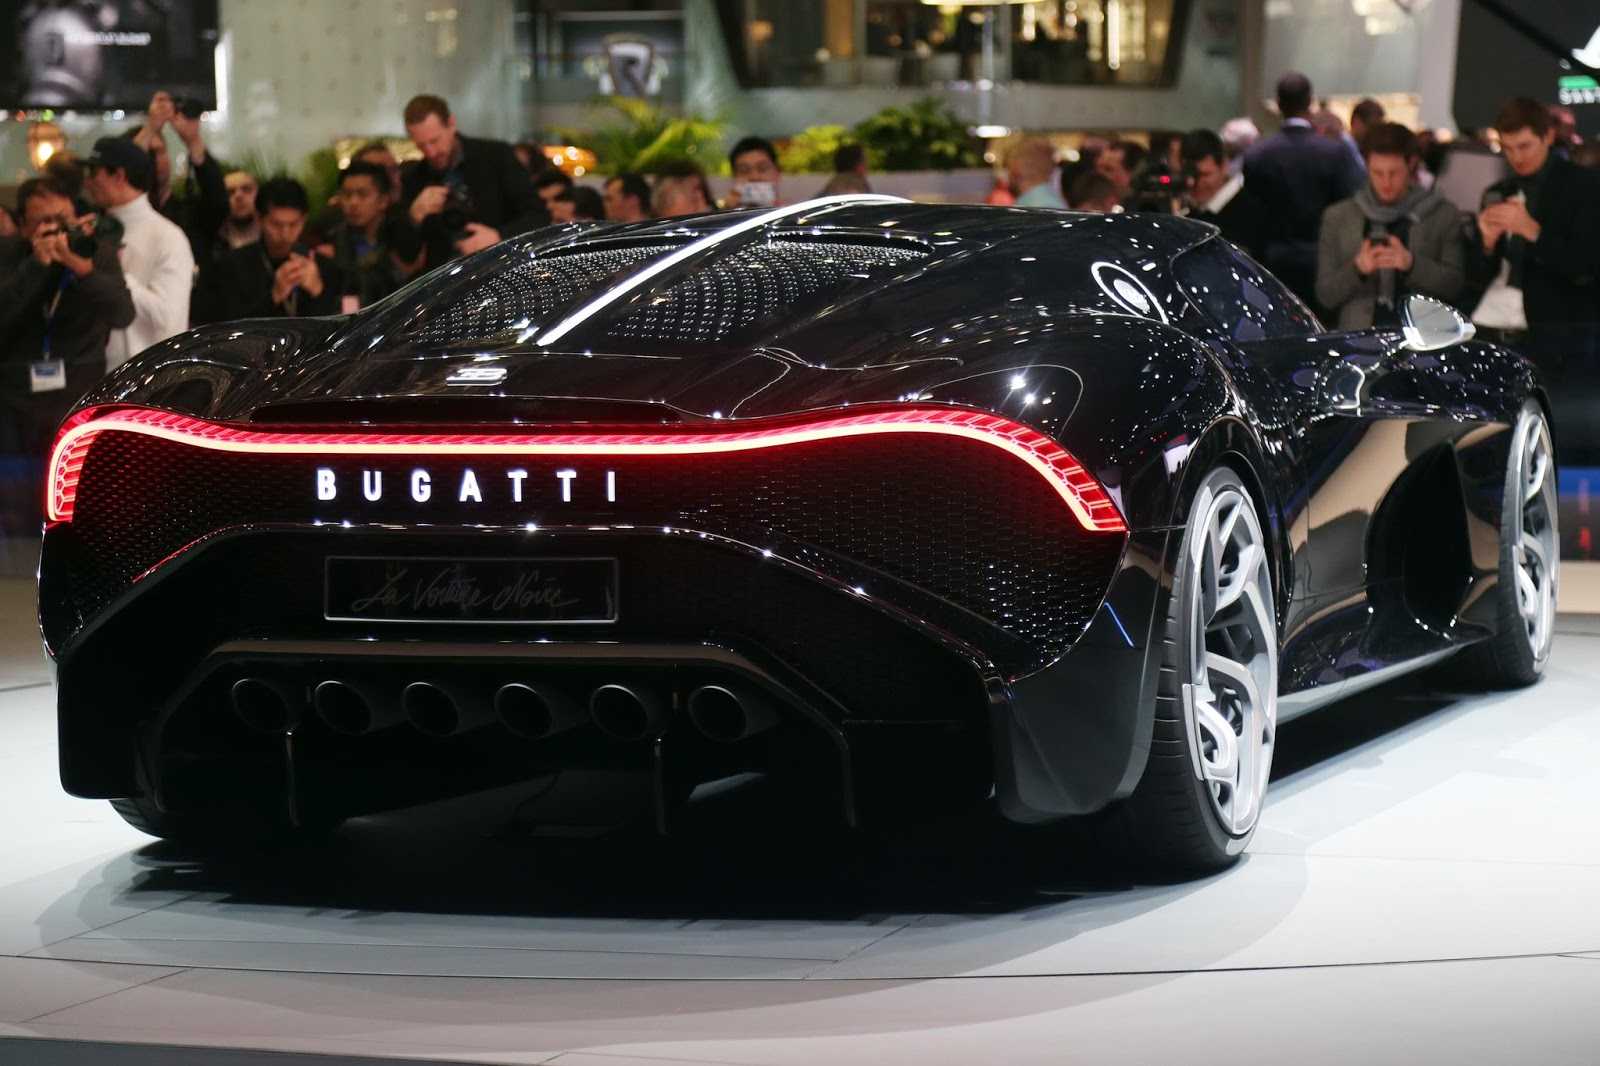 Bugatti veyron vitesse la finale (2015) › характеристики, описание, видео и фото бугатти вейрон витесс финал › autozov.ru